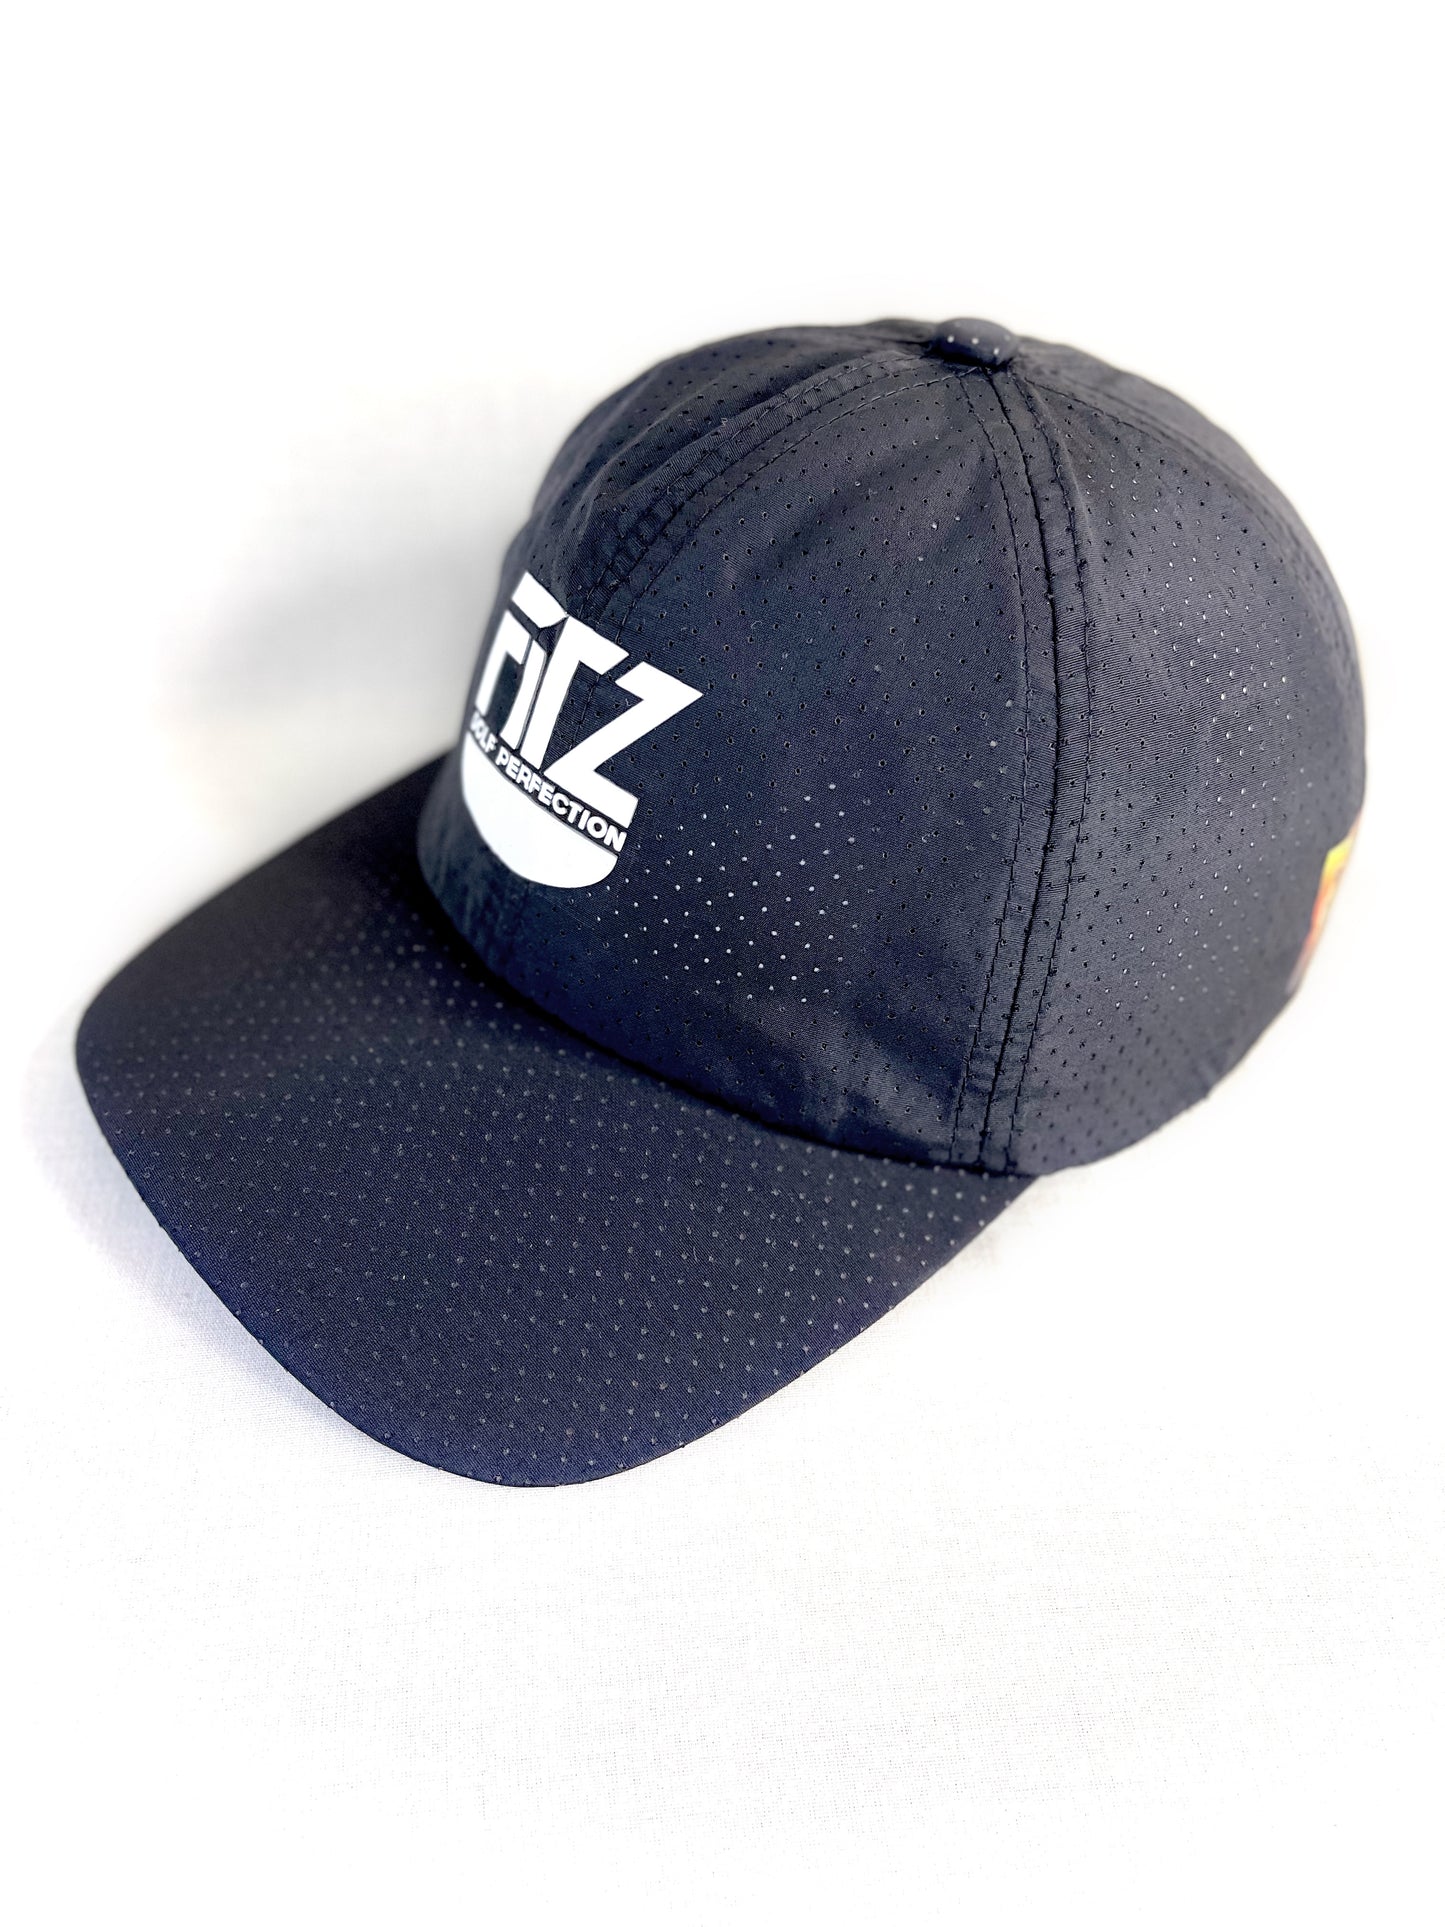 FitzOne Black Sports Mesh Hat (White Logo)